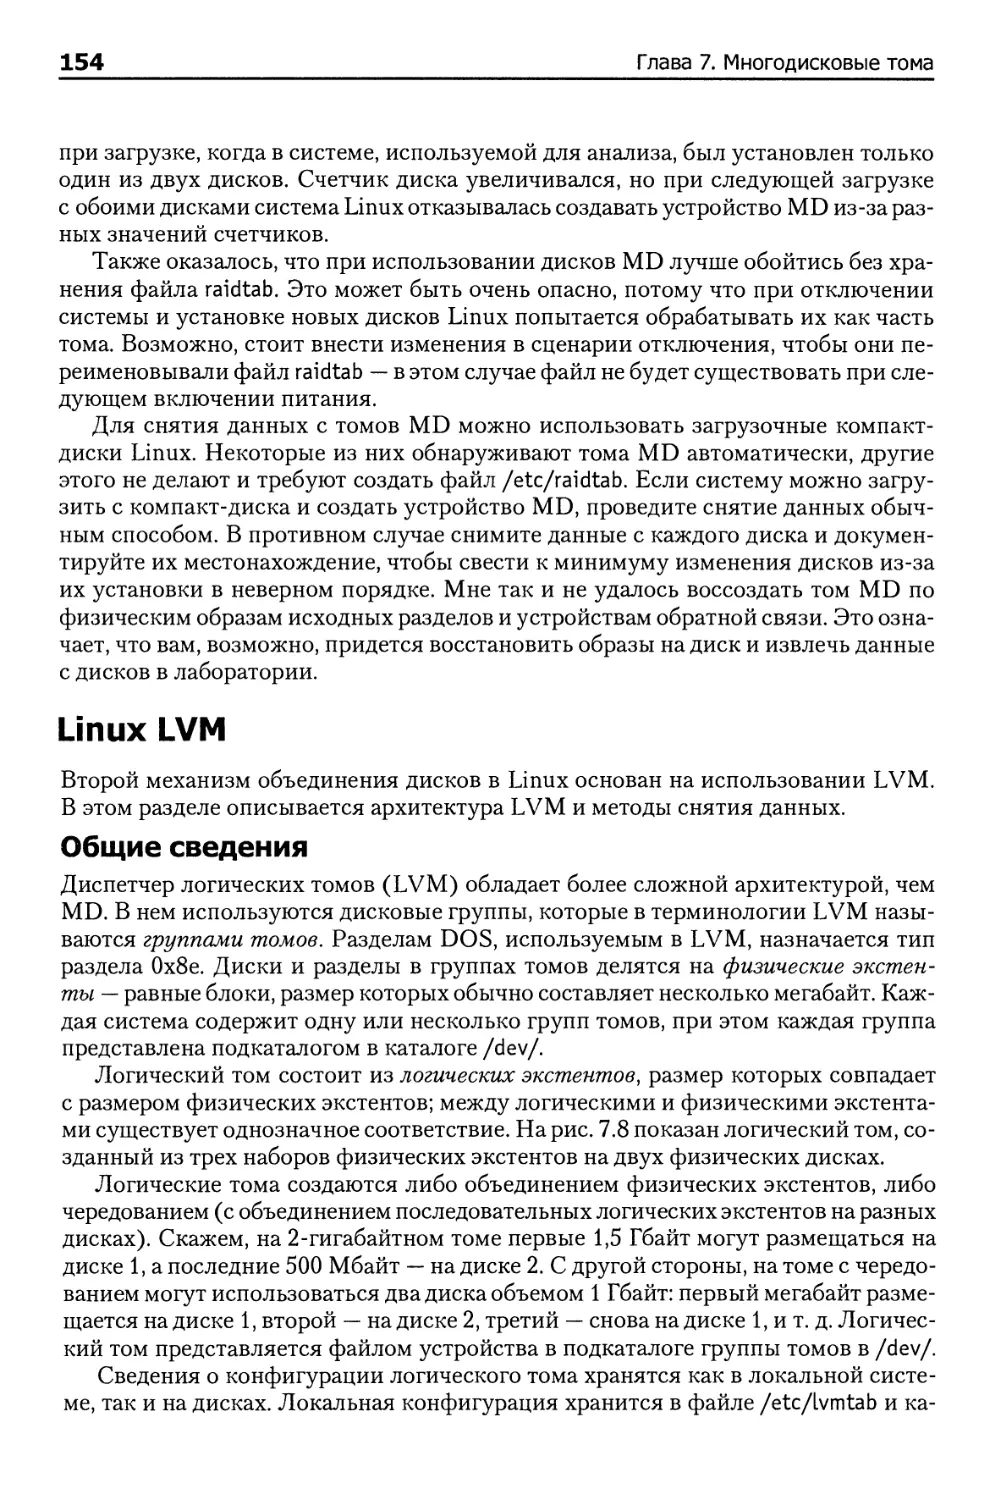 Linux LVM